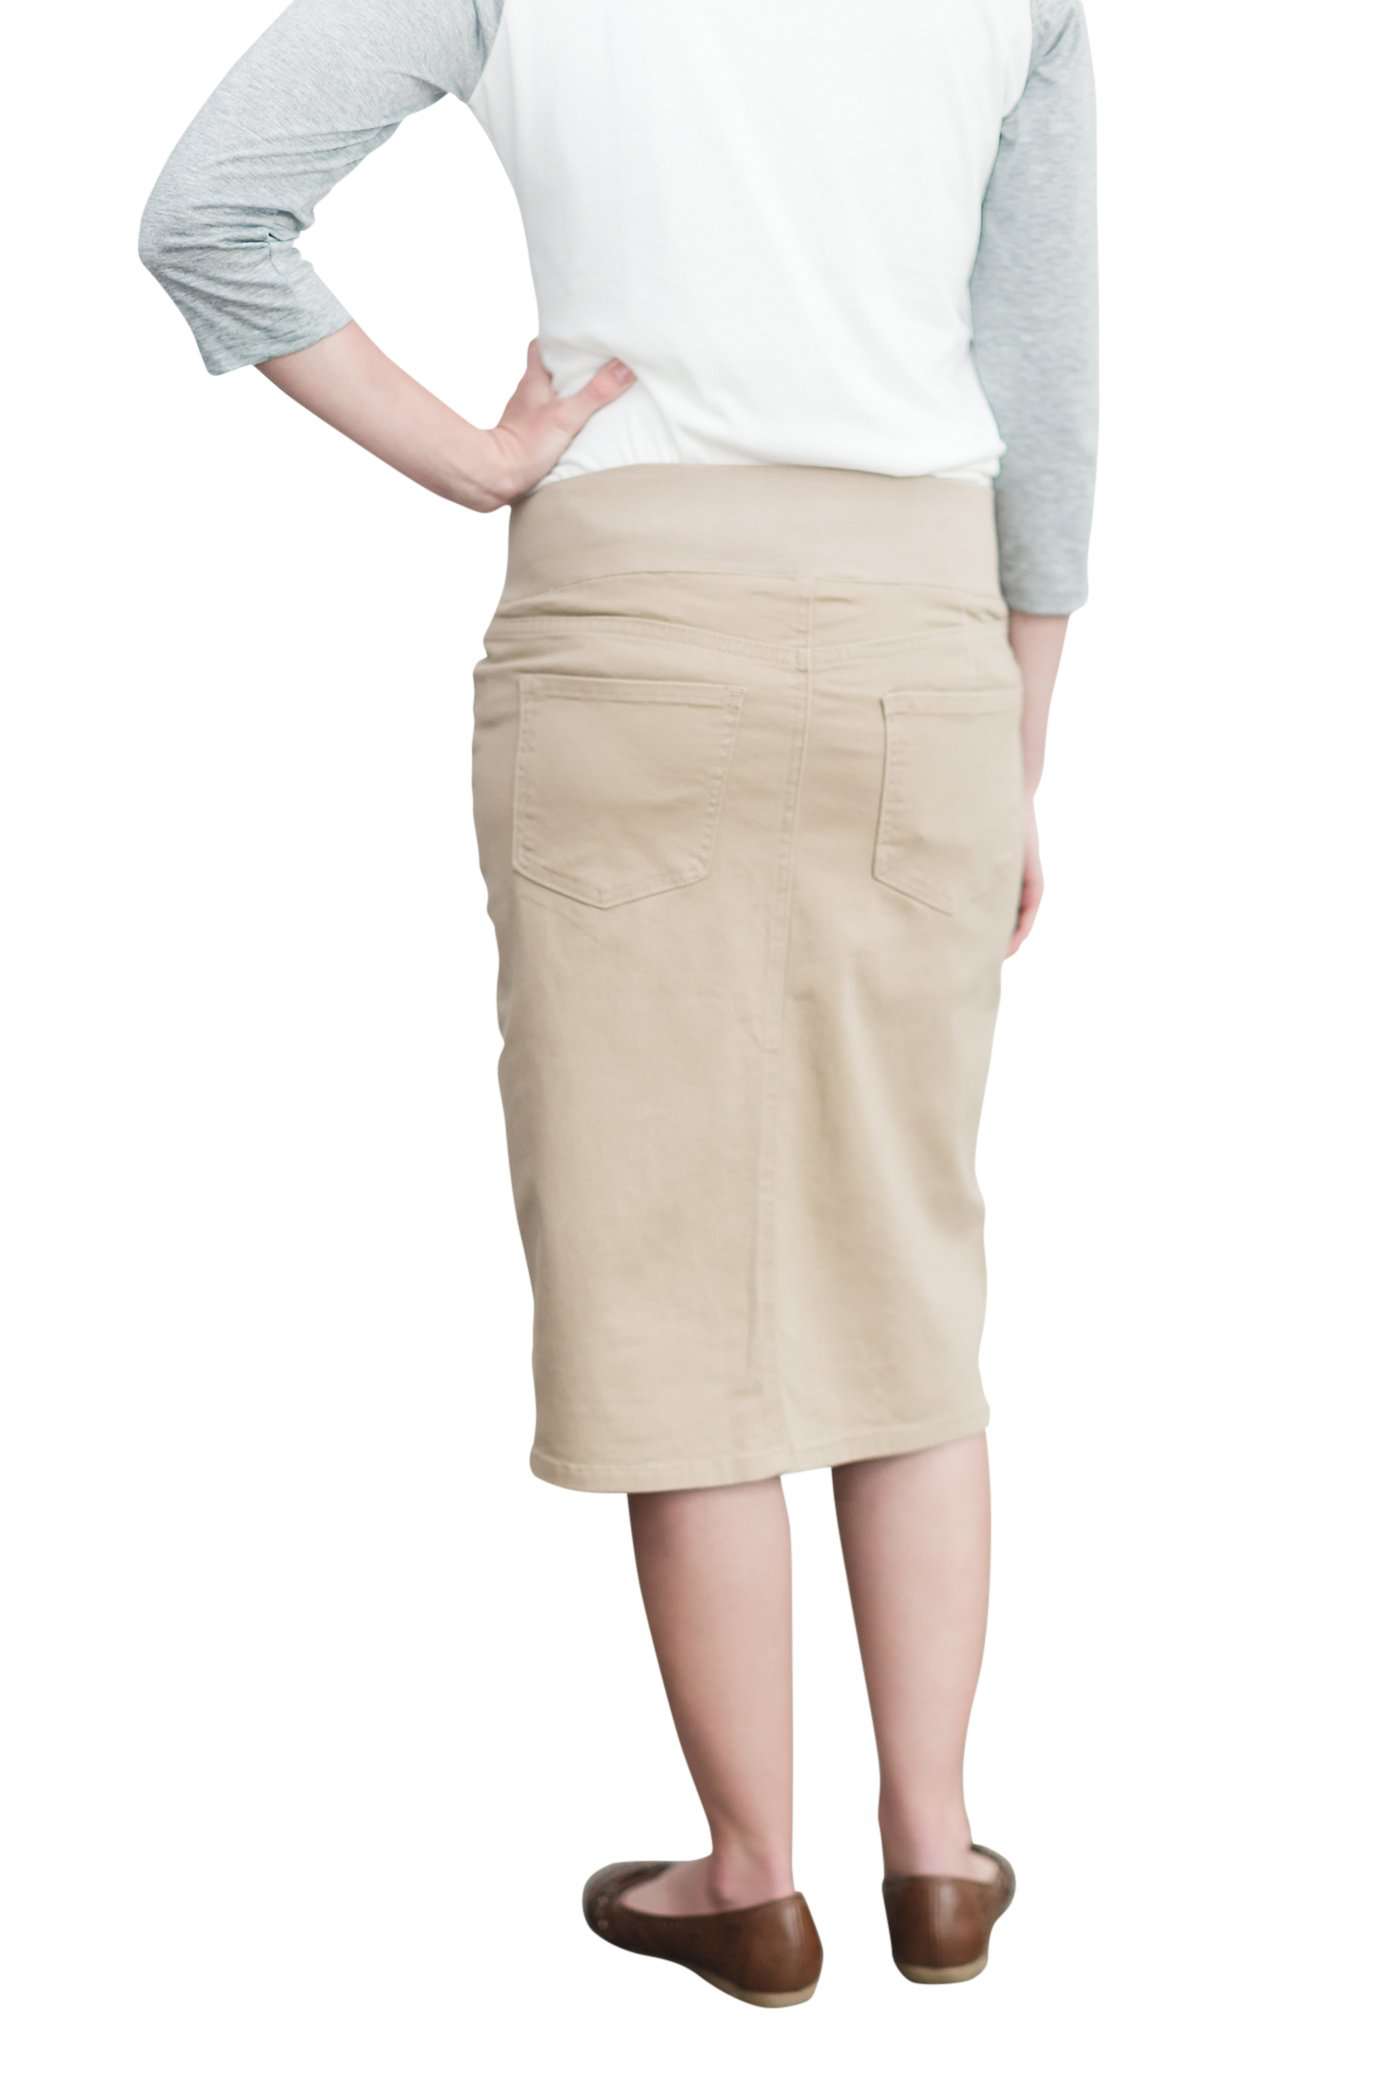 Redirected Remi Khaki Maternity Skirt Skirts